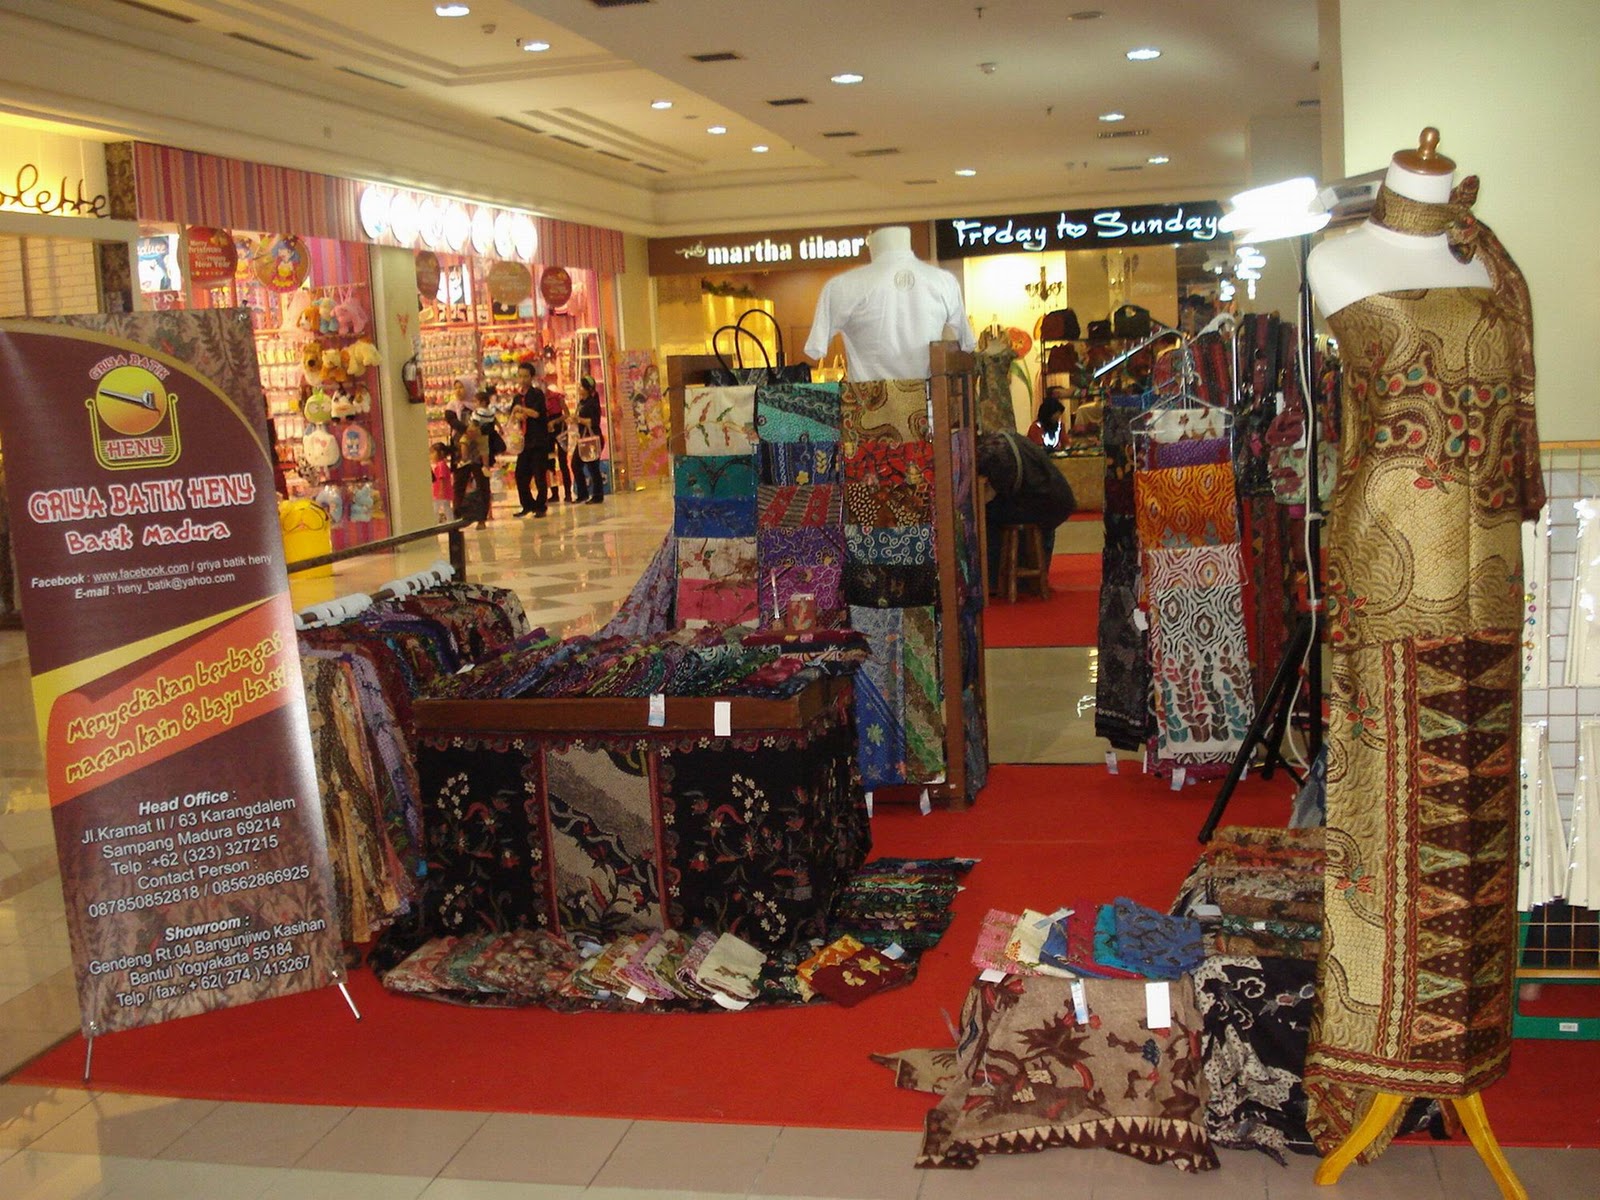 Griya Batik Heny: Stand pameran batik di Plaza ambarukmo Jogjakarta